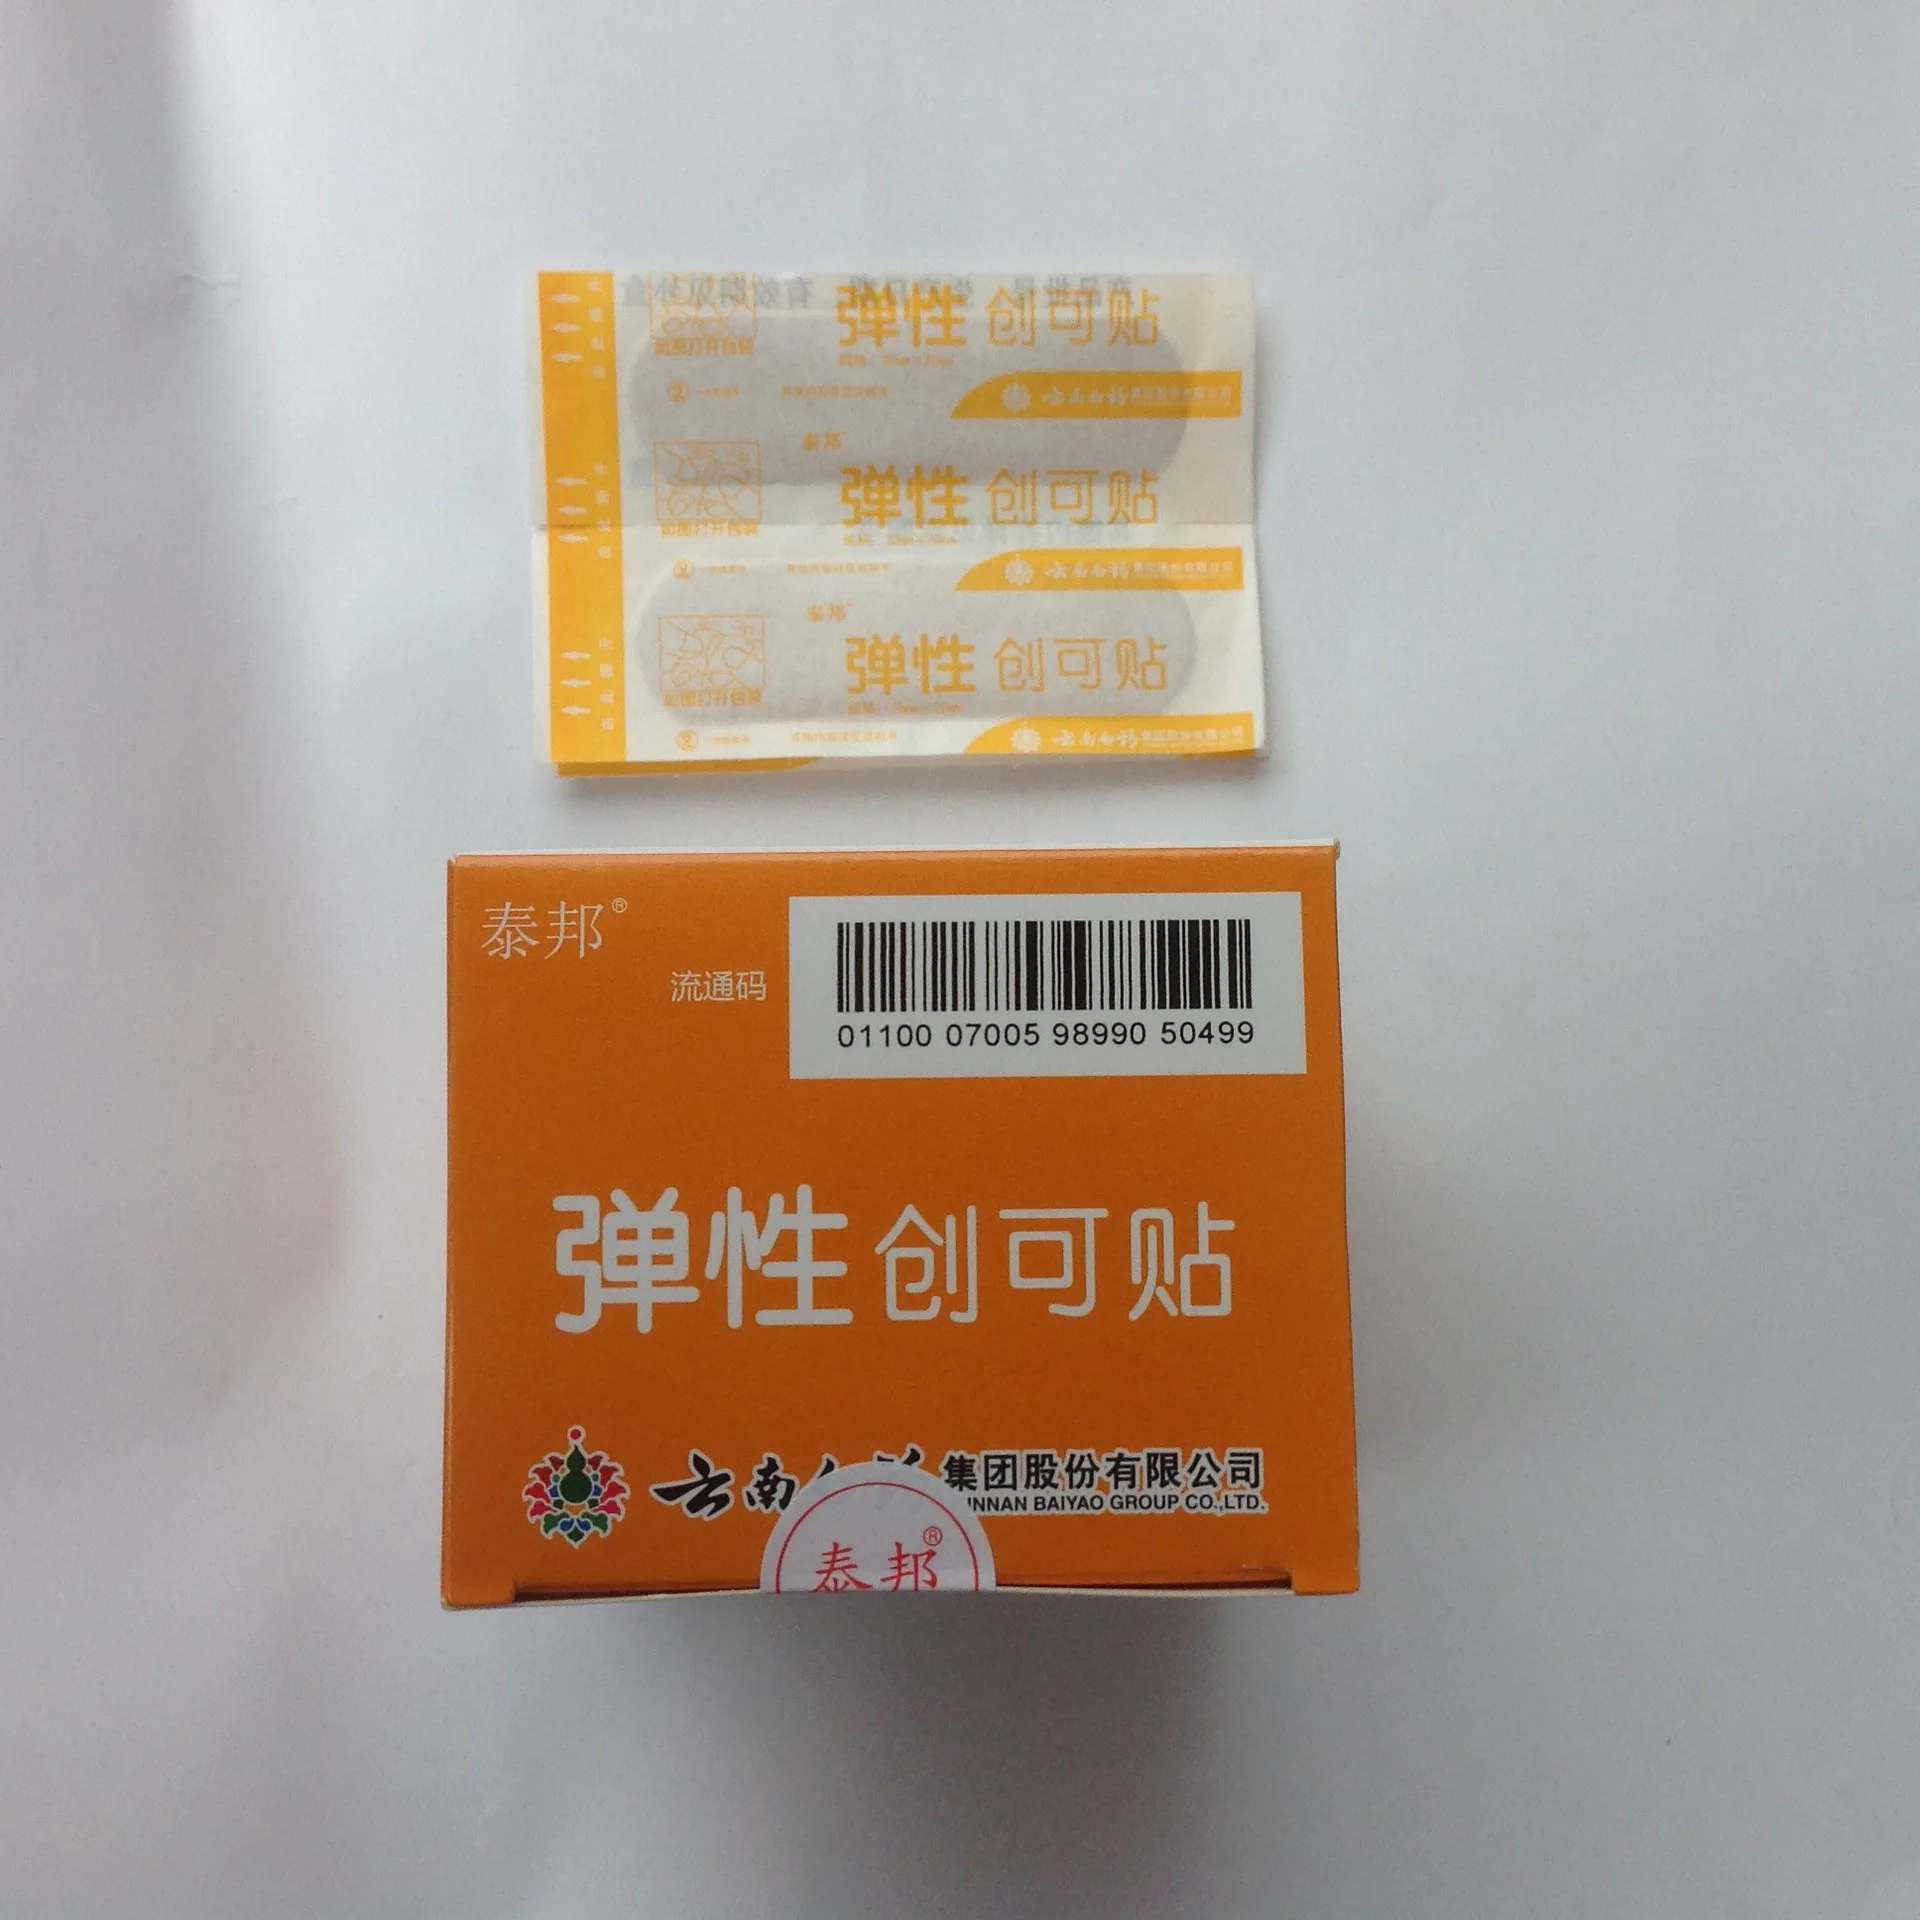 Yunnan Baiyao Band-Aid 100 pcs Elastic Household Outdoor Survival Wound Dressing Sterilization and Ventilation Band-Aid